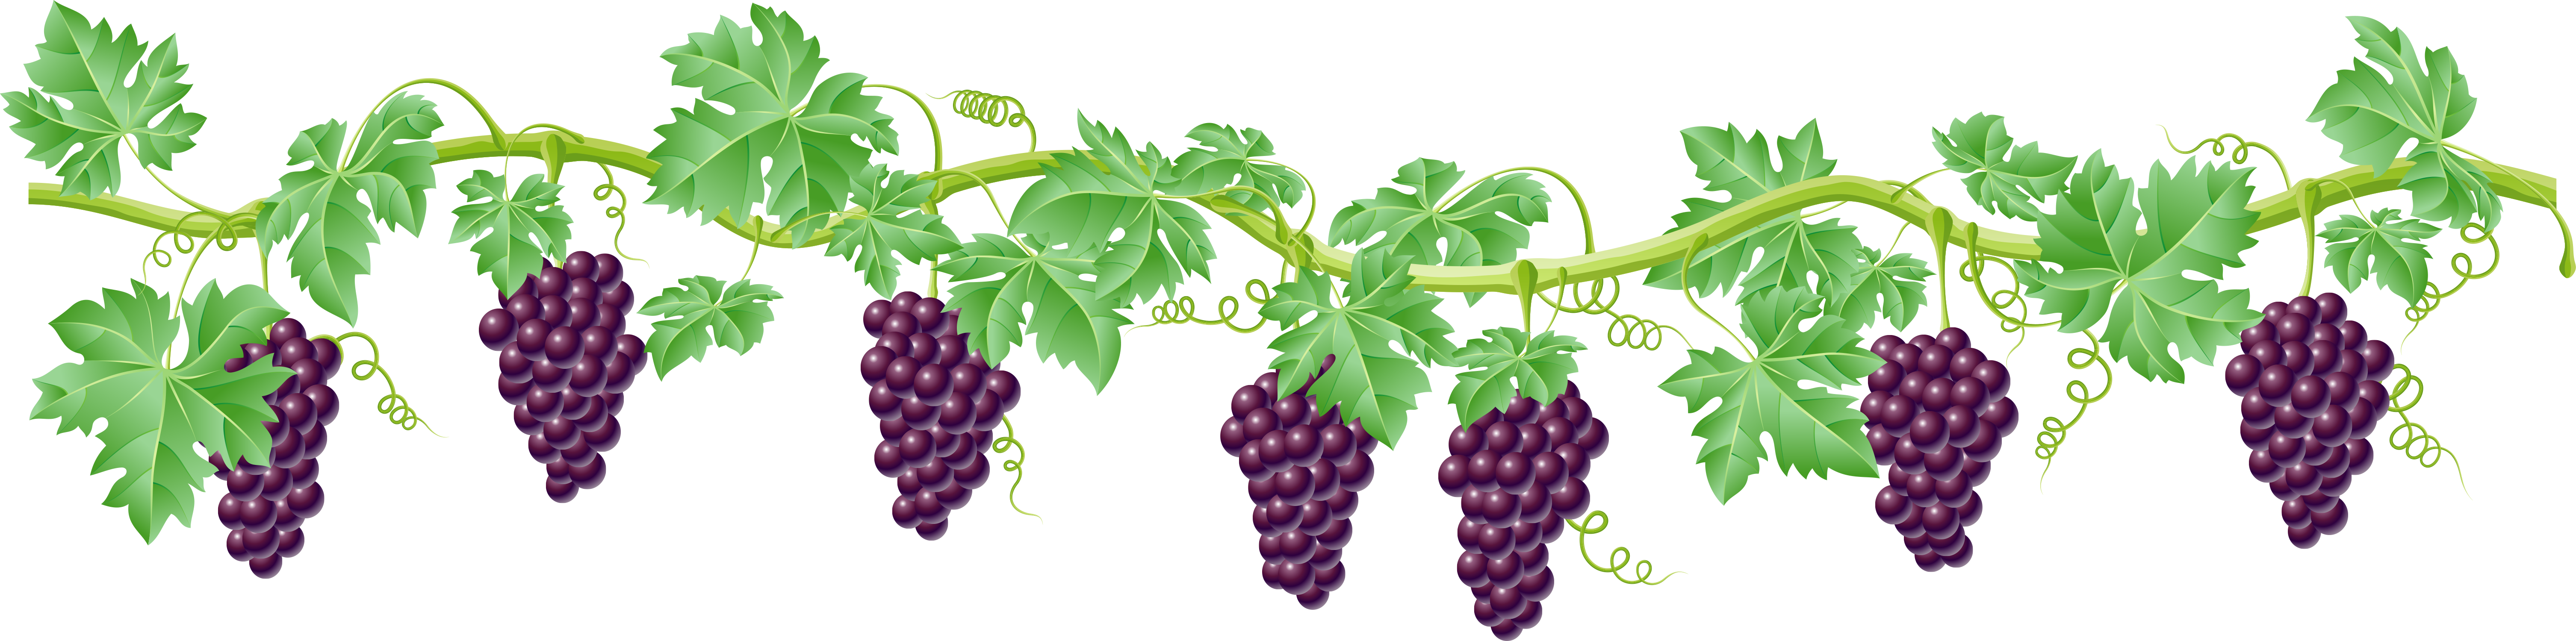 Vine Grape Clip Art - Vine Grape Clip Art (6025x1500)